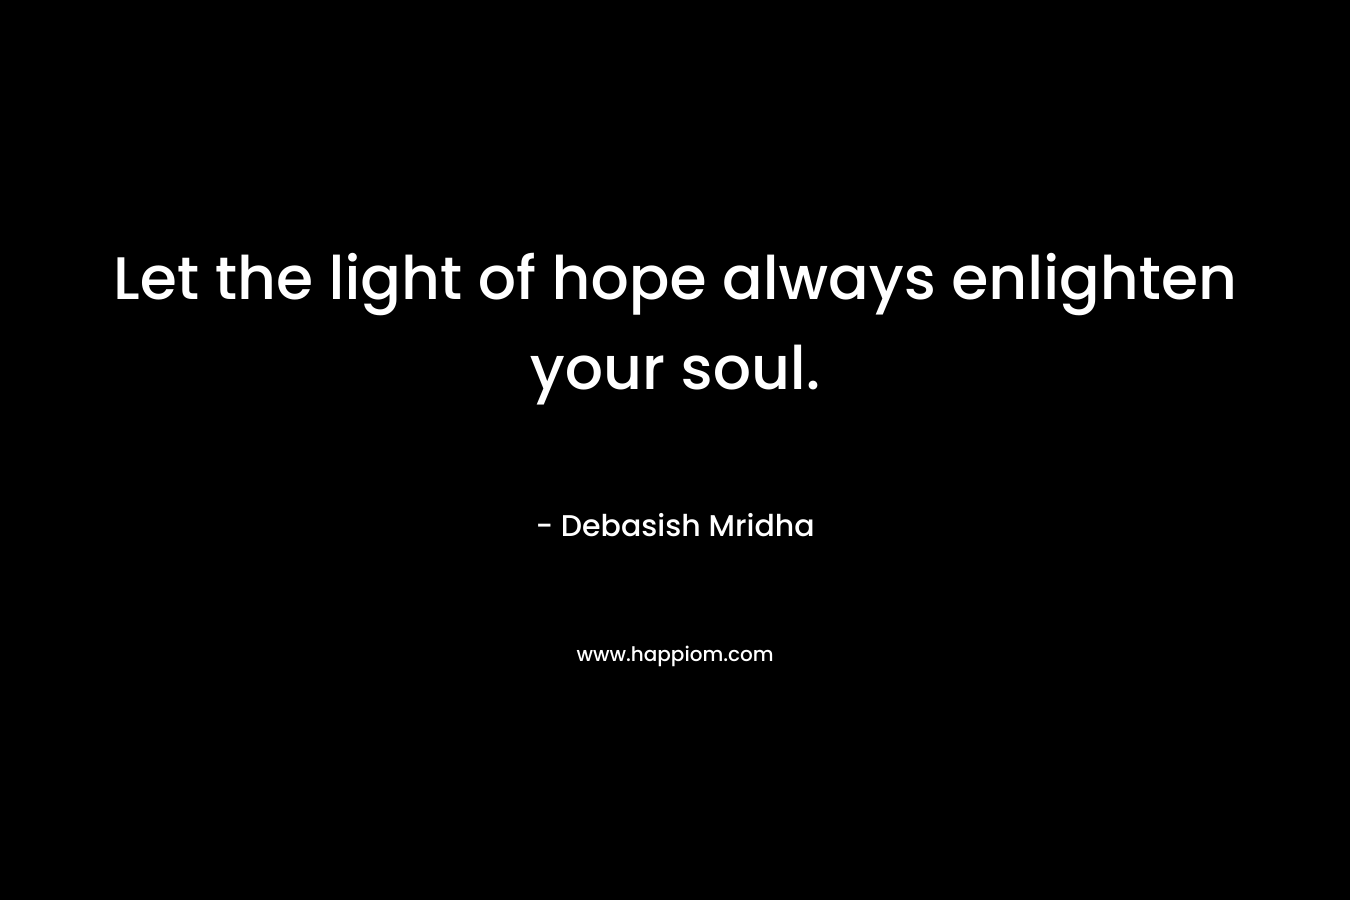 Let the light of hope always enlighten your soul.